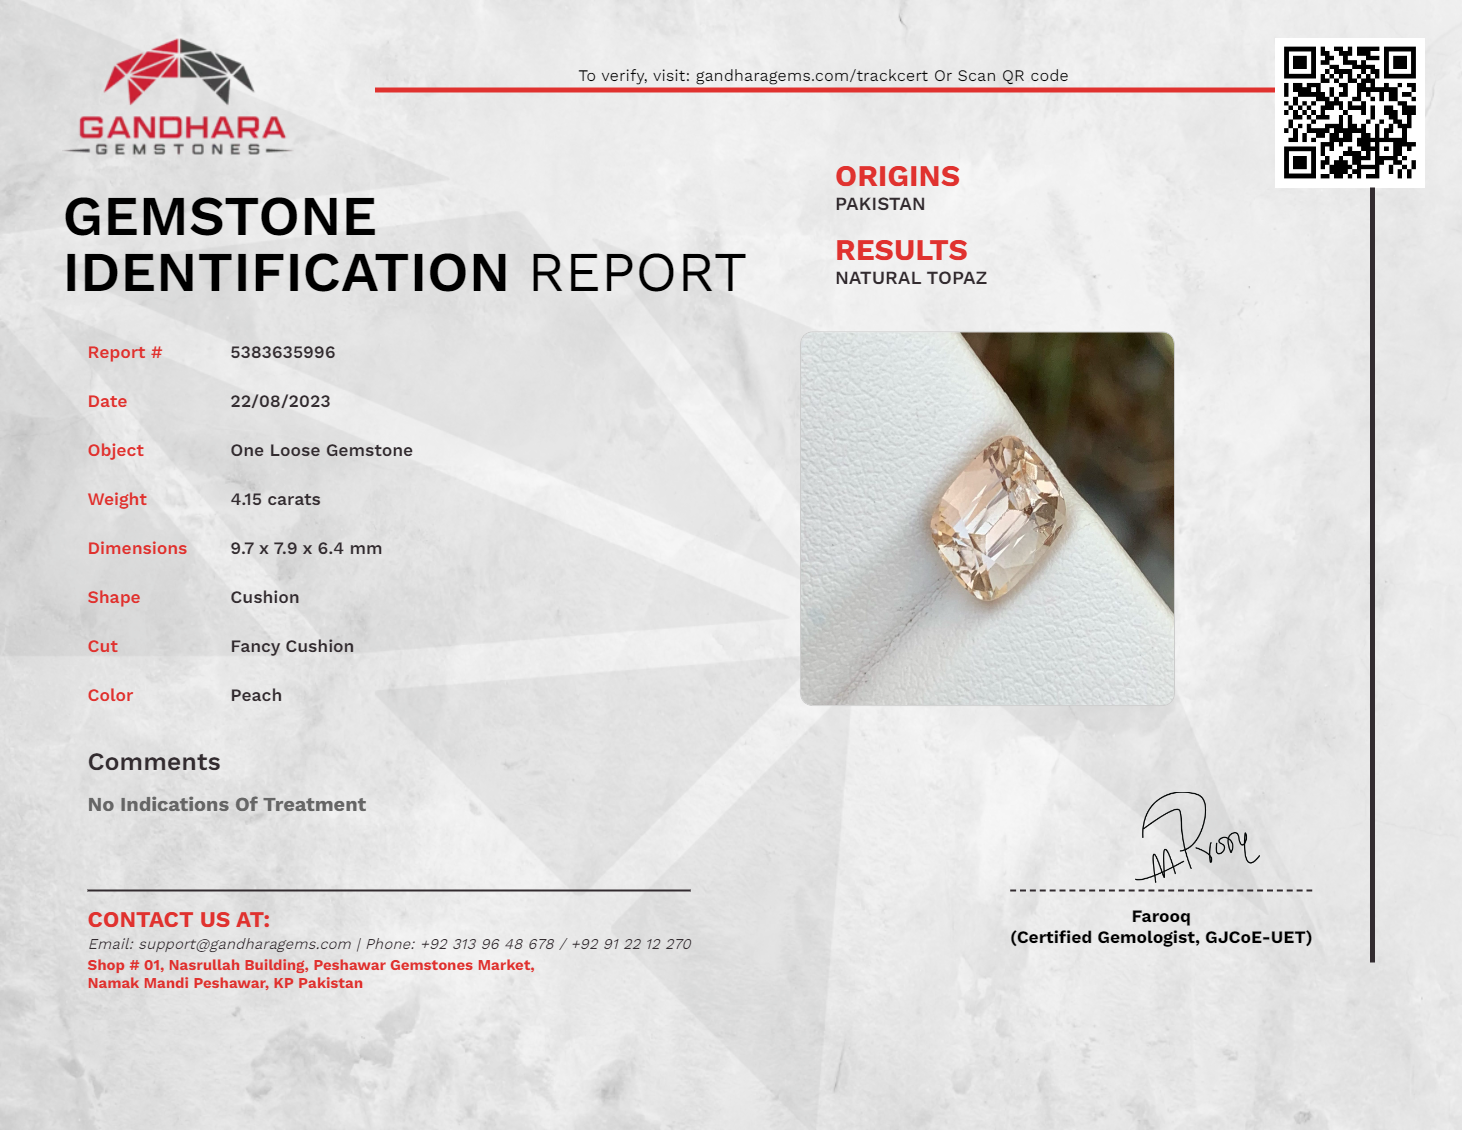 Iridescent Imperial Topaz 4.15 carats Cushion Cut Natural Pakistani Gemstone